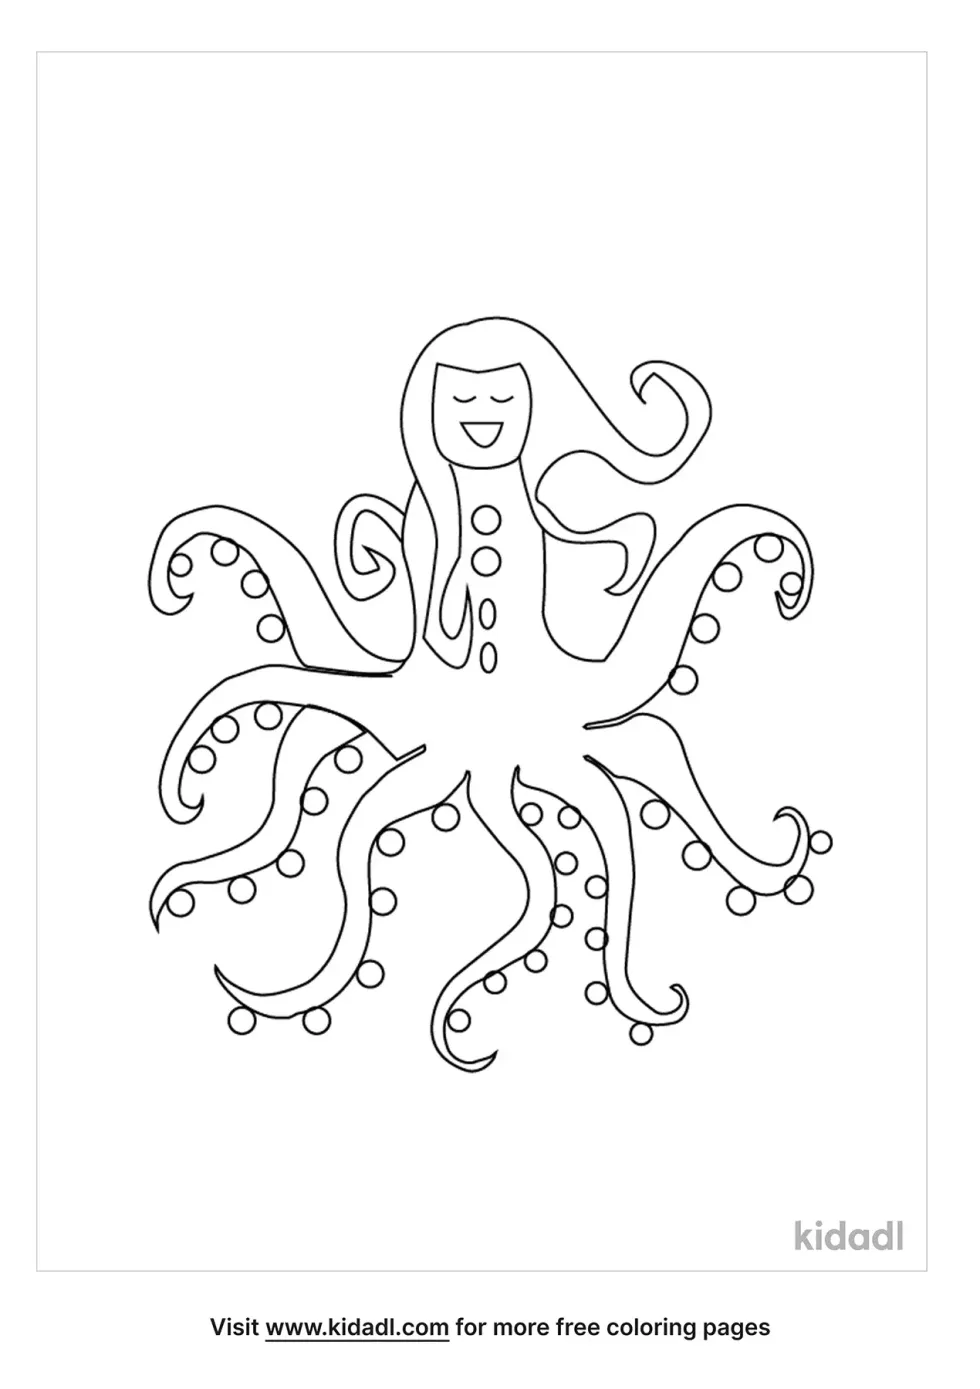 Half Human Half Octopus